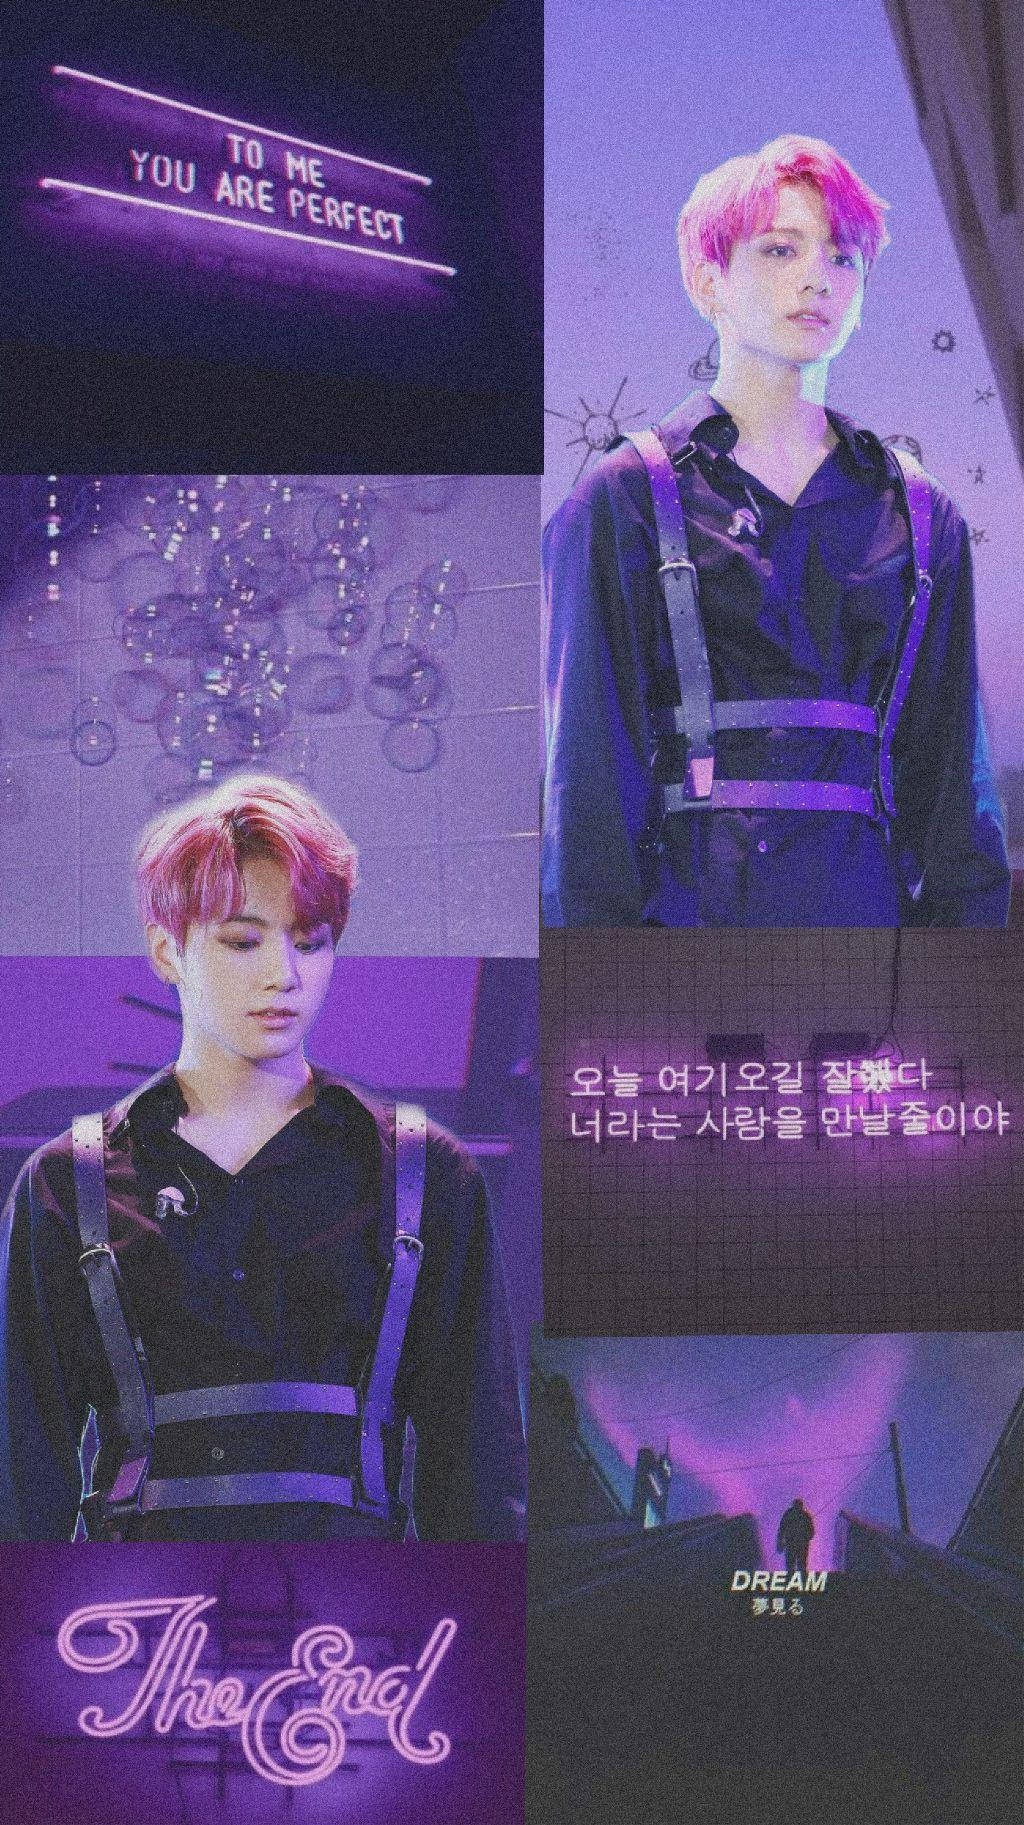 Neon Purple Jungkook Aesthetic Background